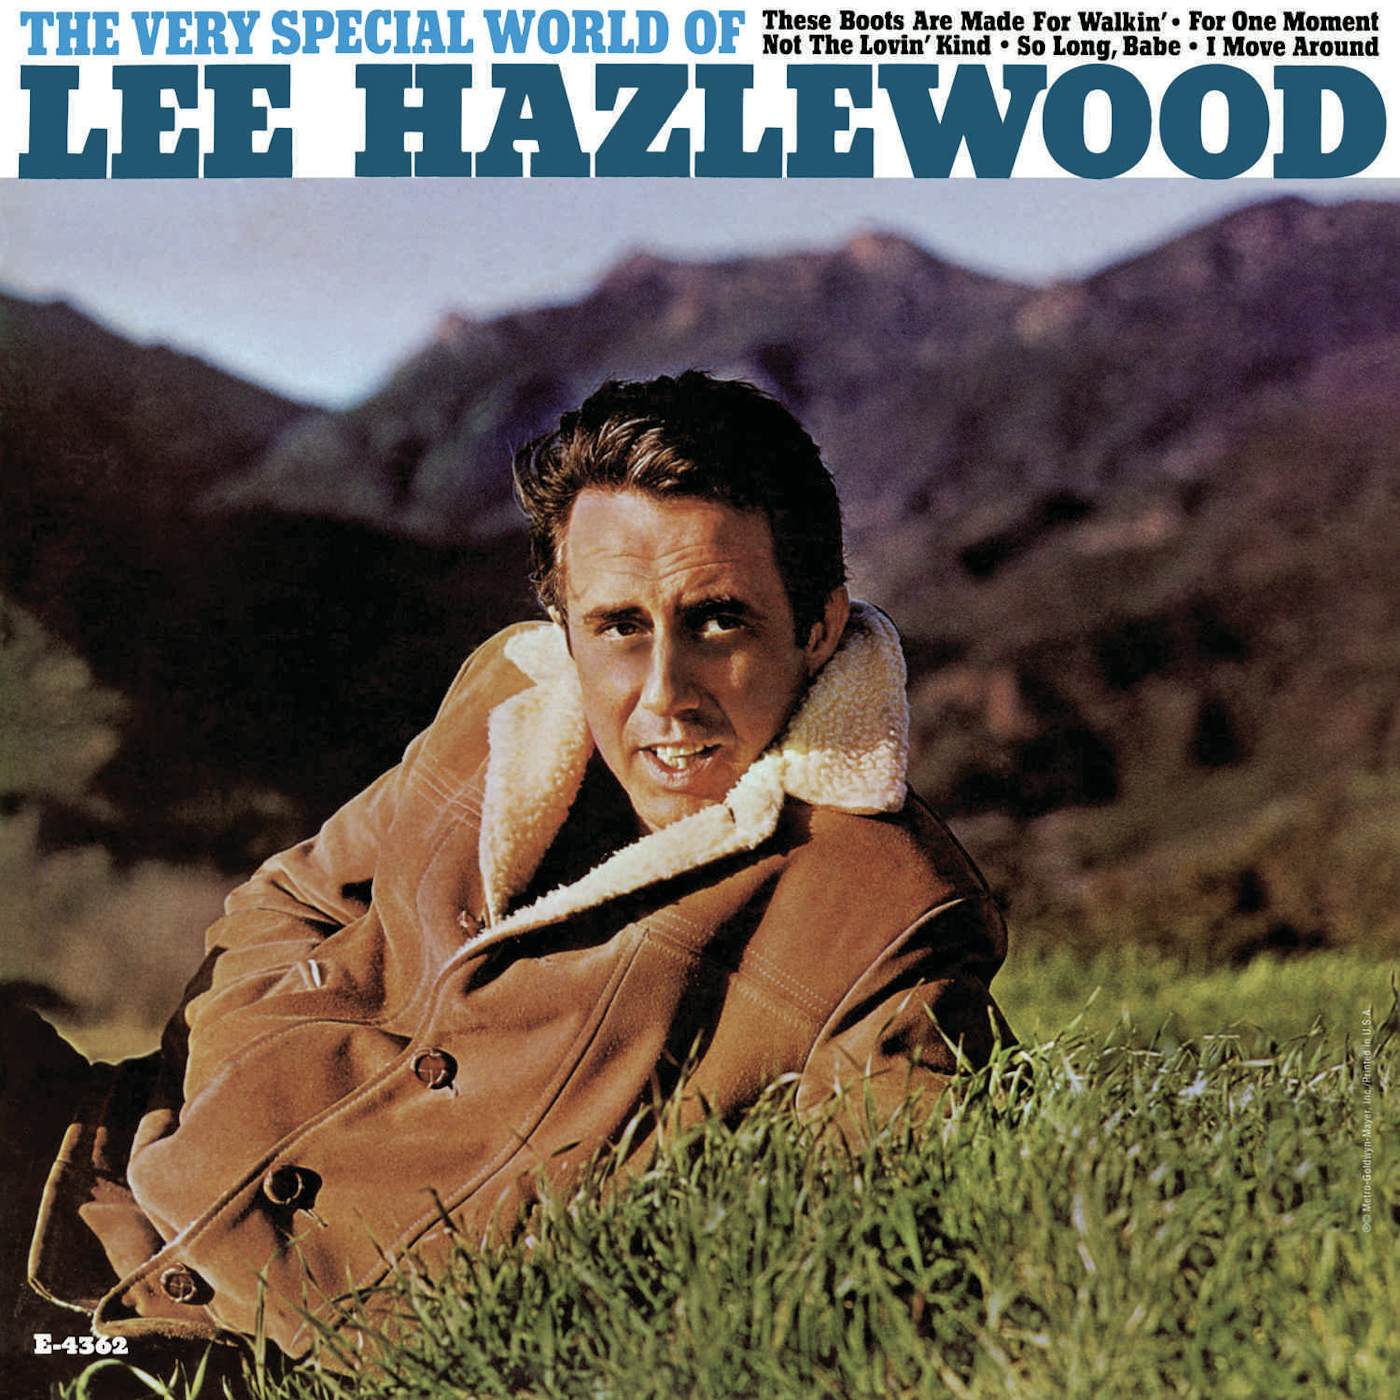 VERY SPECIAL WORLD OF LEE HAZLEWOOD Vinyl Record